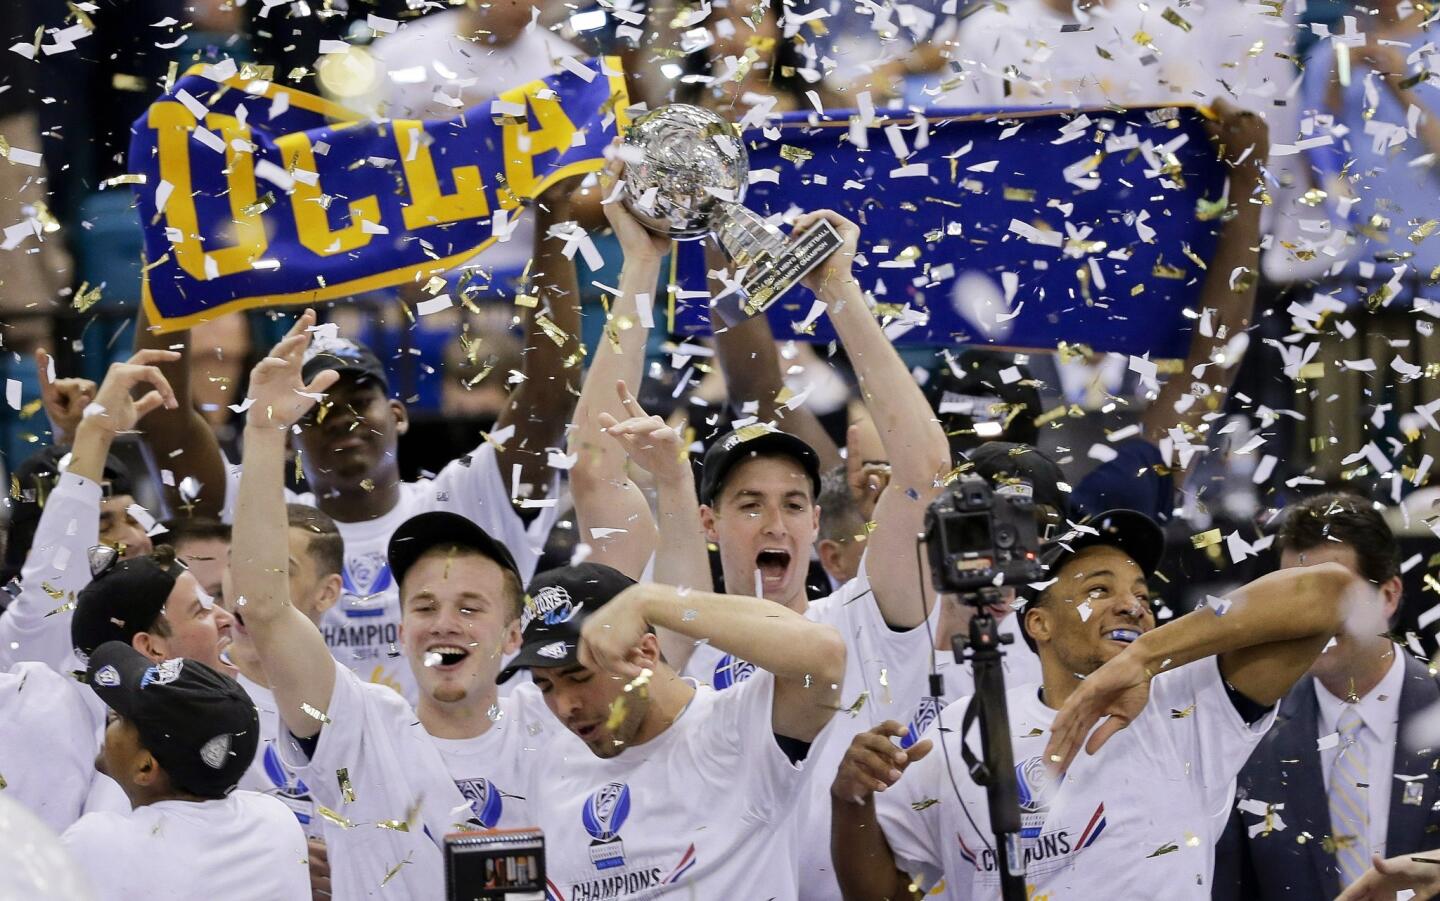 UCLA players celebrate